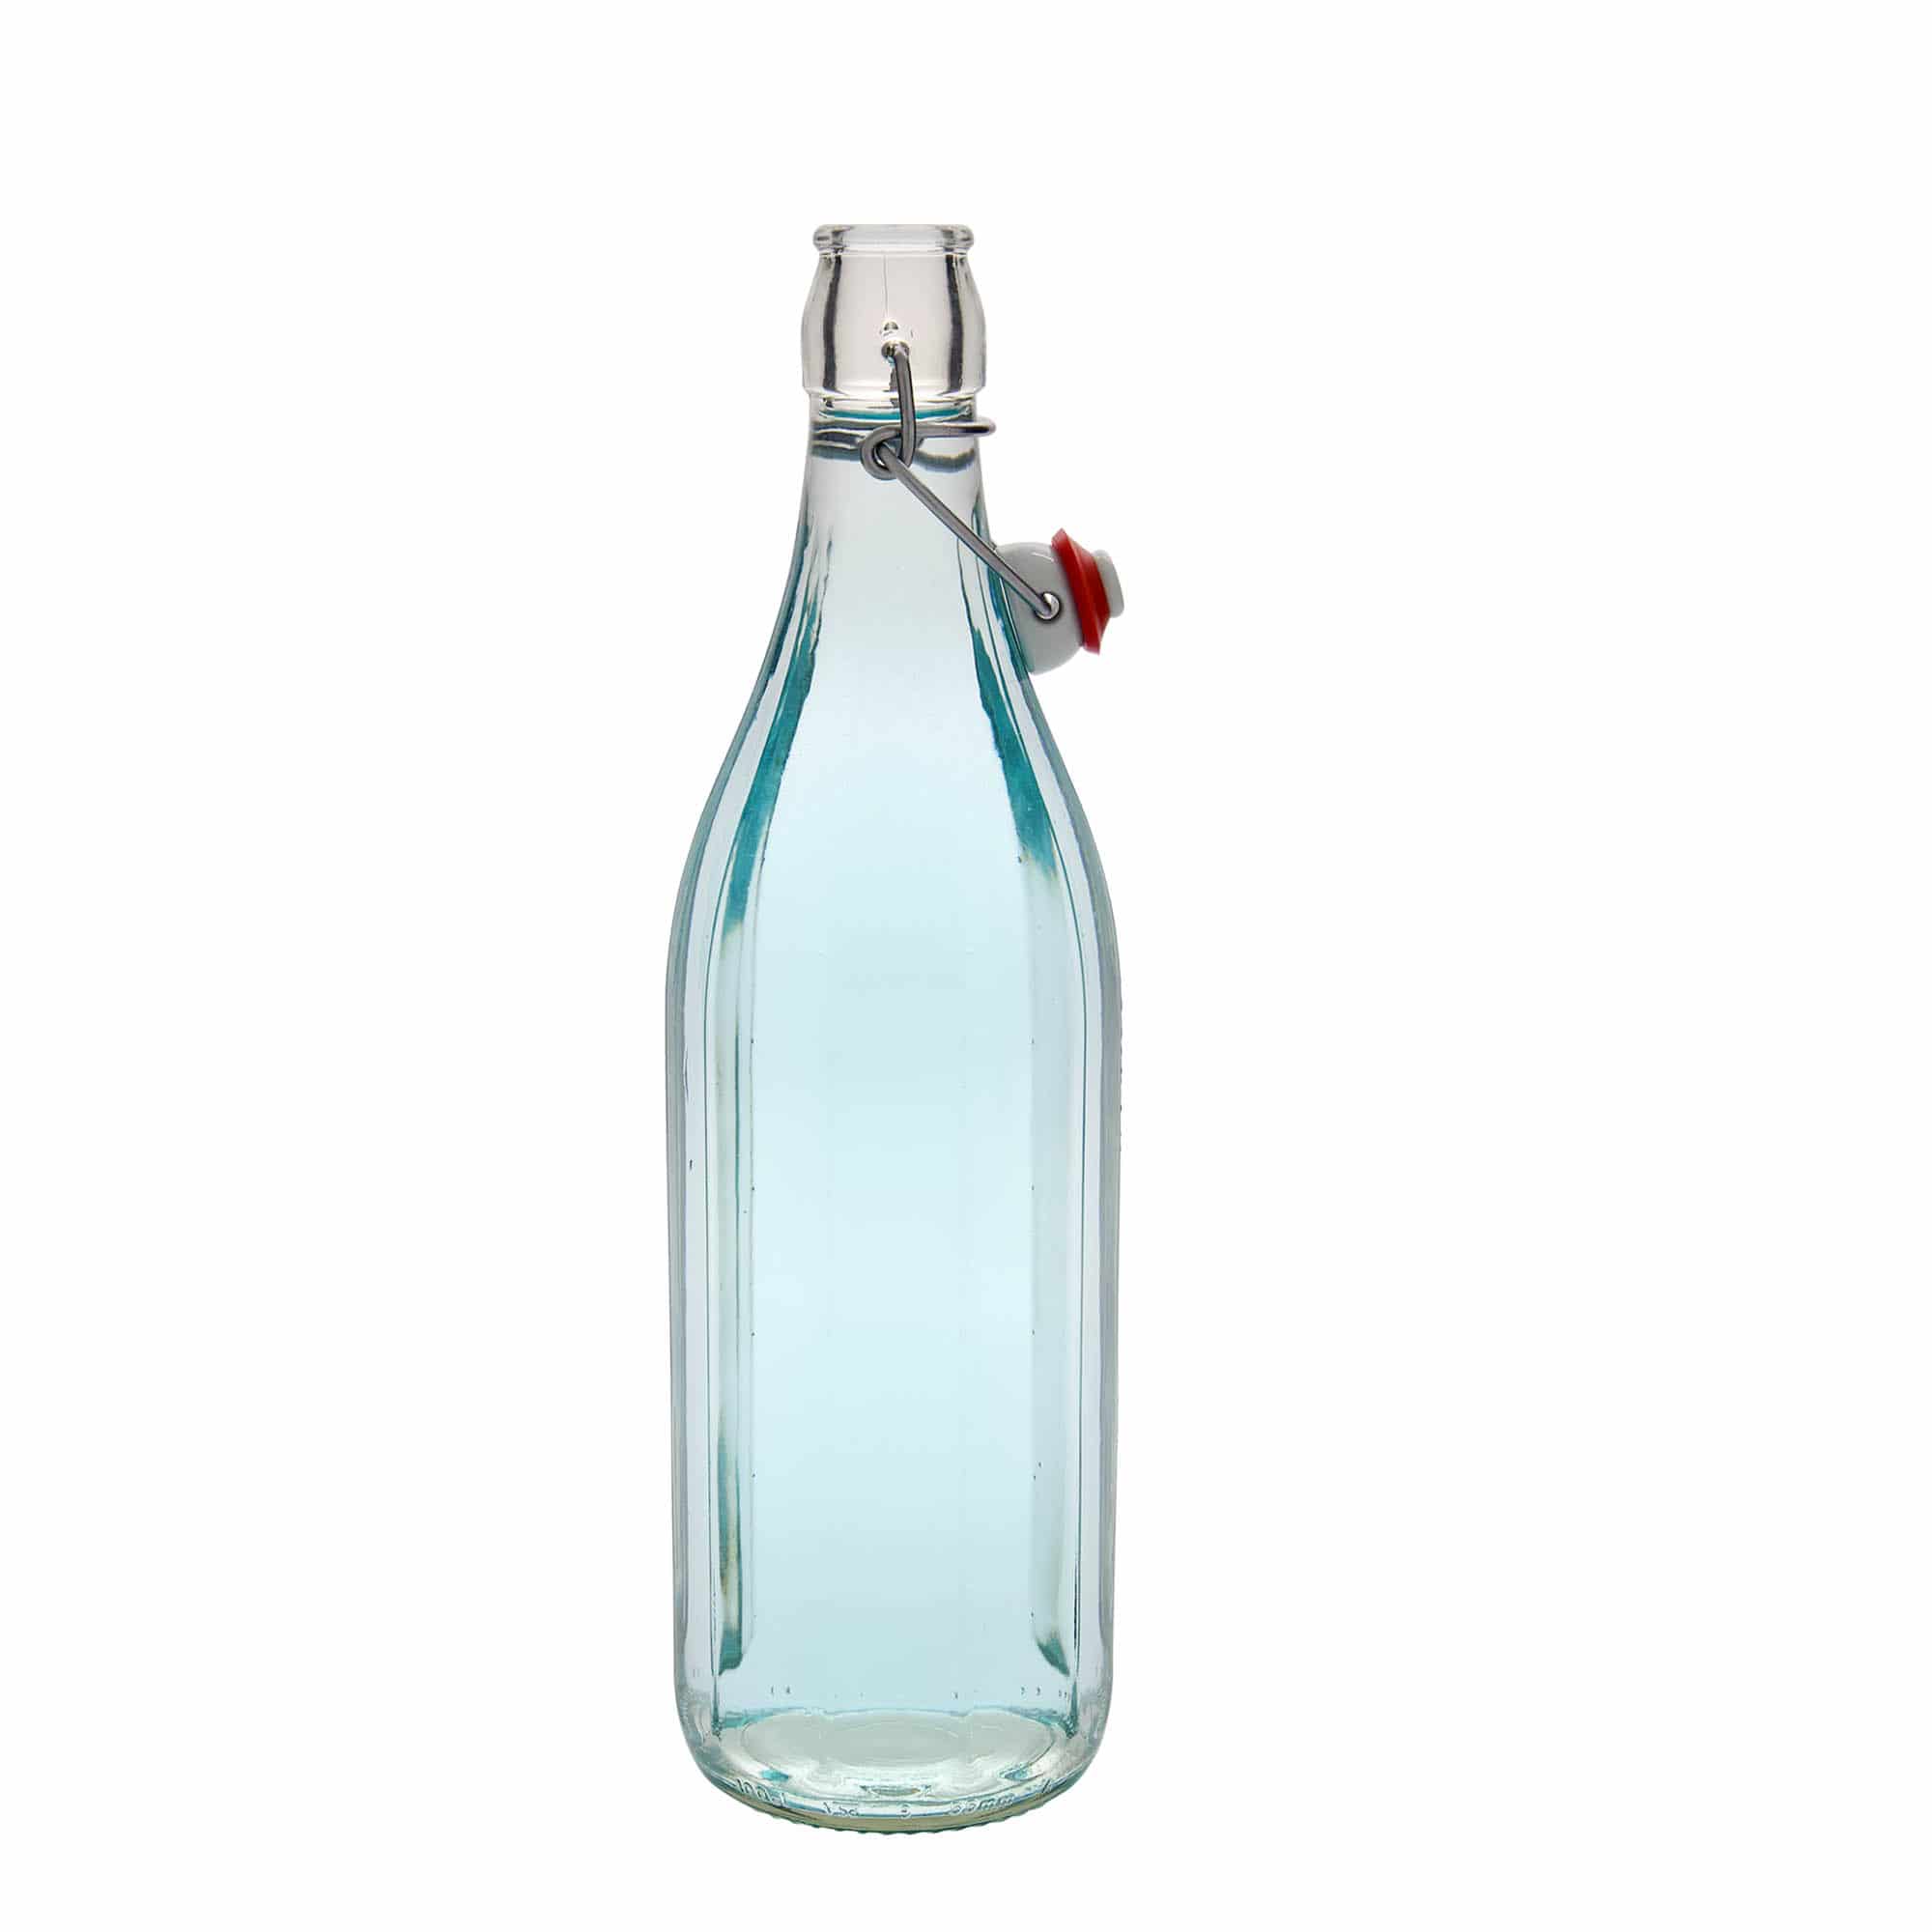 1,000 ml glass bottle 'Bravo', ten-sided, closure: swing top